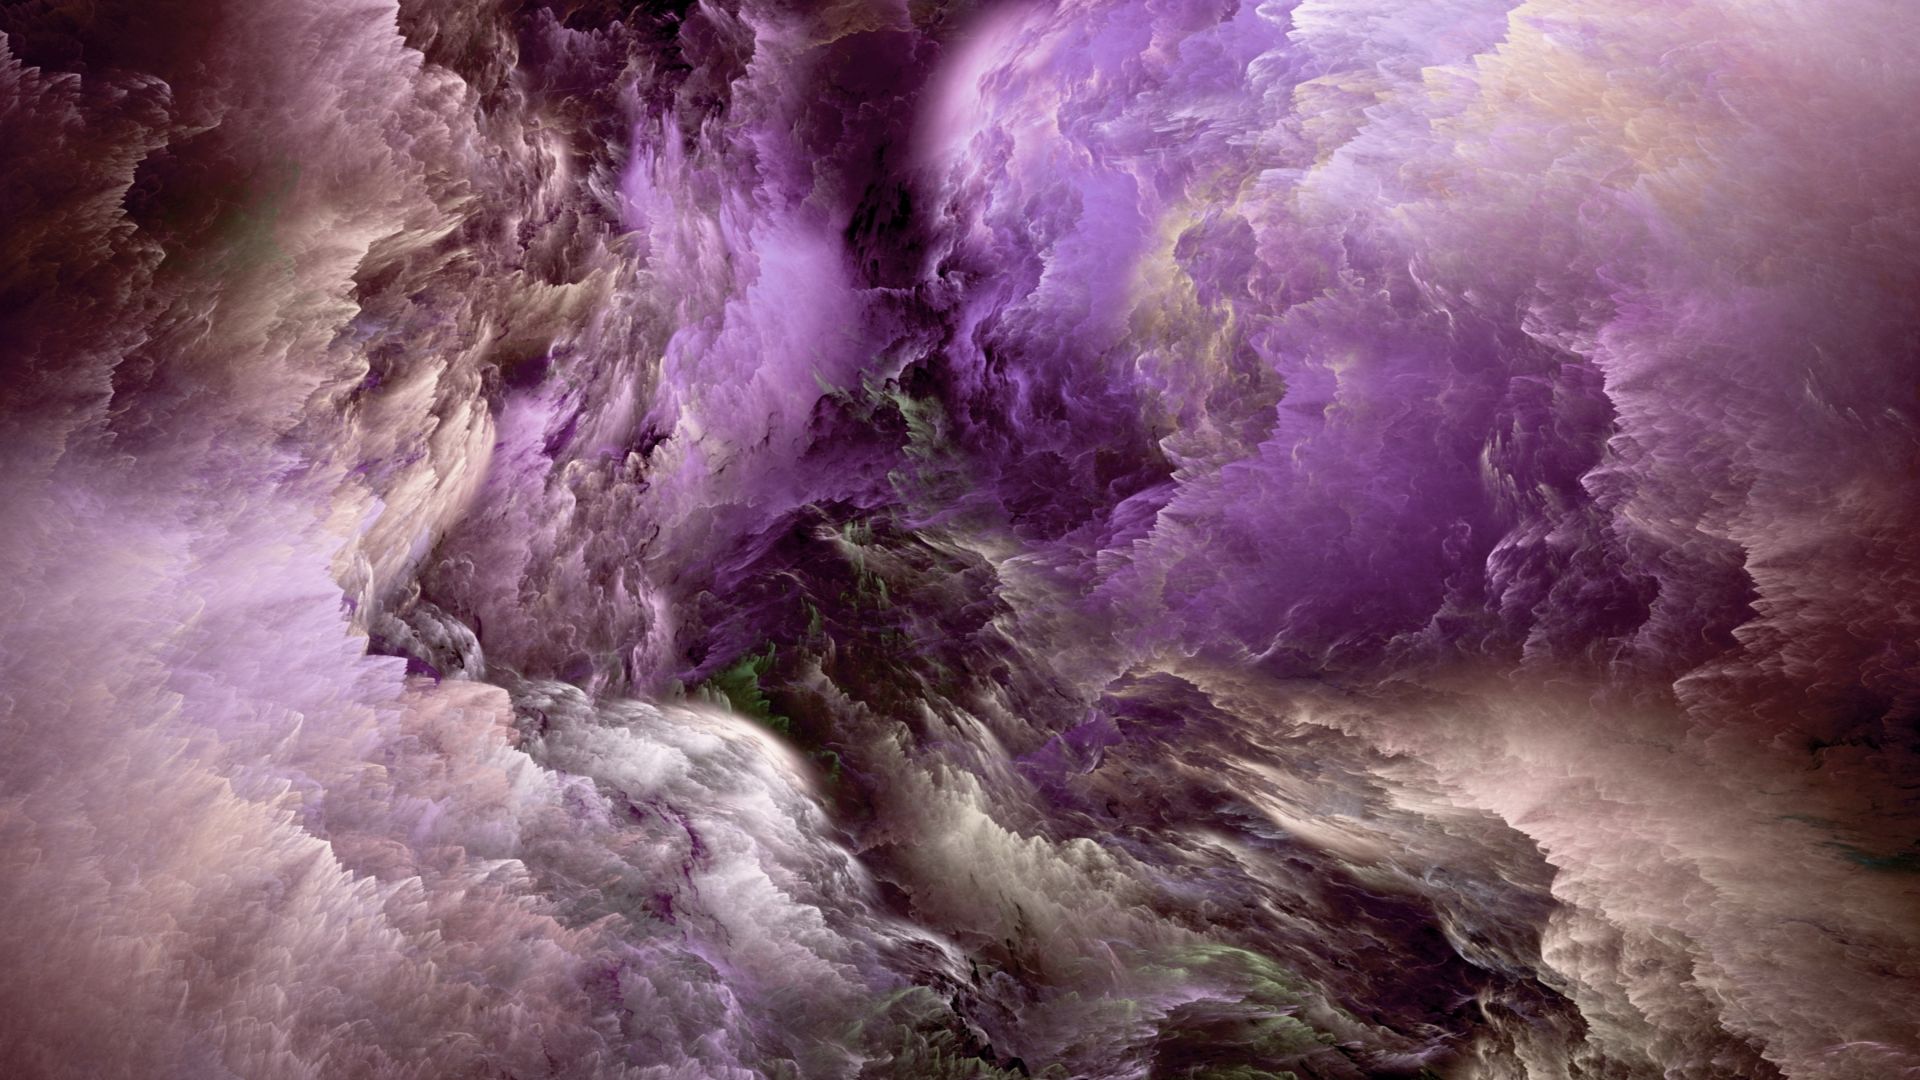 Облака, 4k, 5k, 8k wallpaper, абстрактный, фиолетовый, Clouds, 8k, 4k, 5k wallpaper, abstract, purple, live wallpaper, live photo (horizontal)